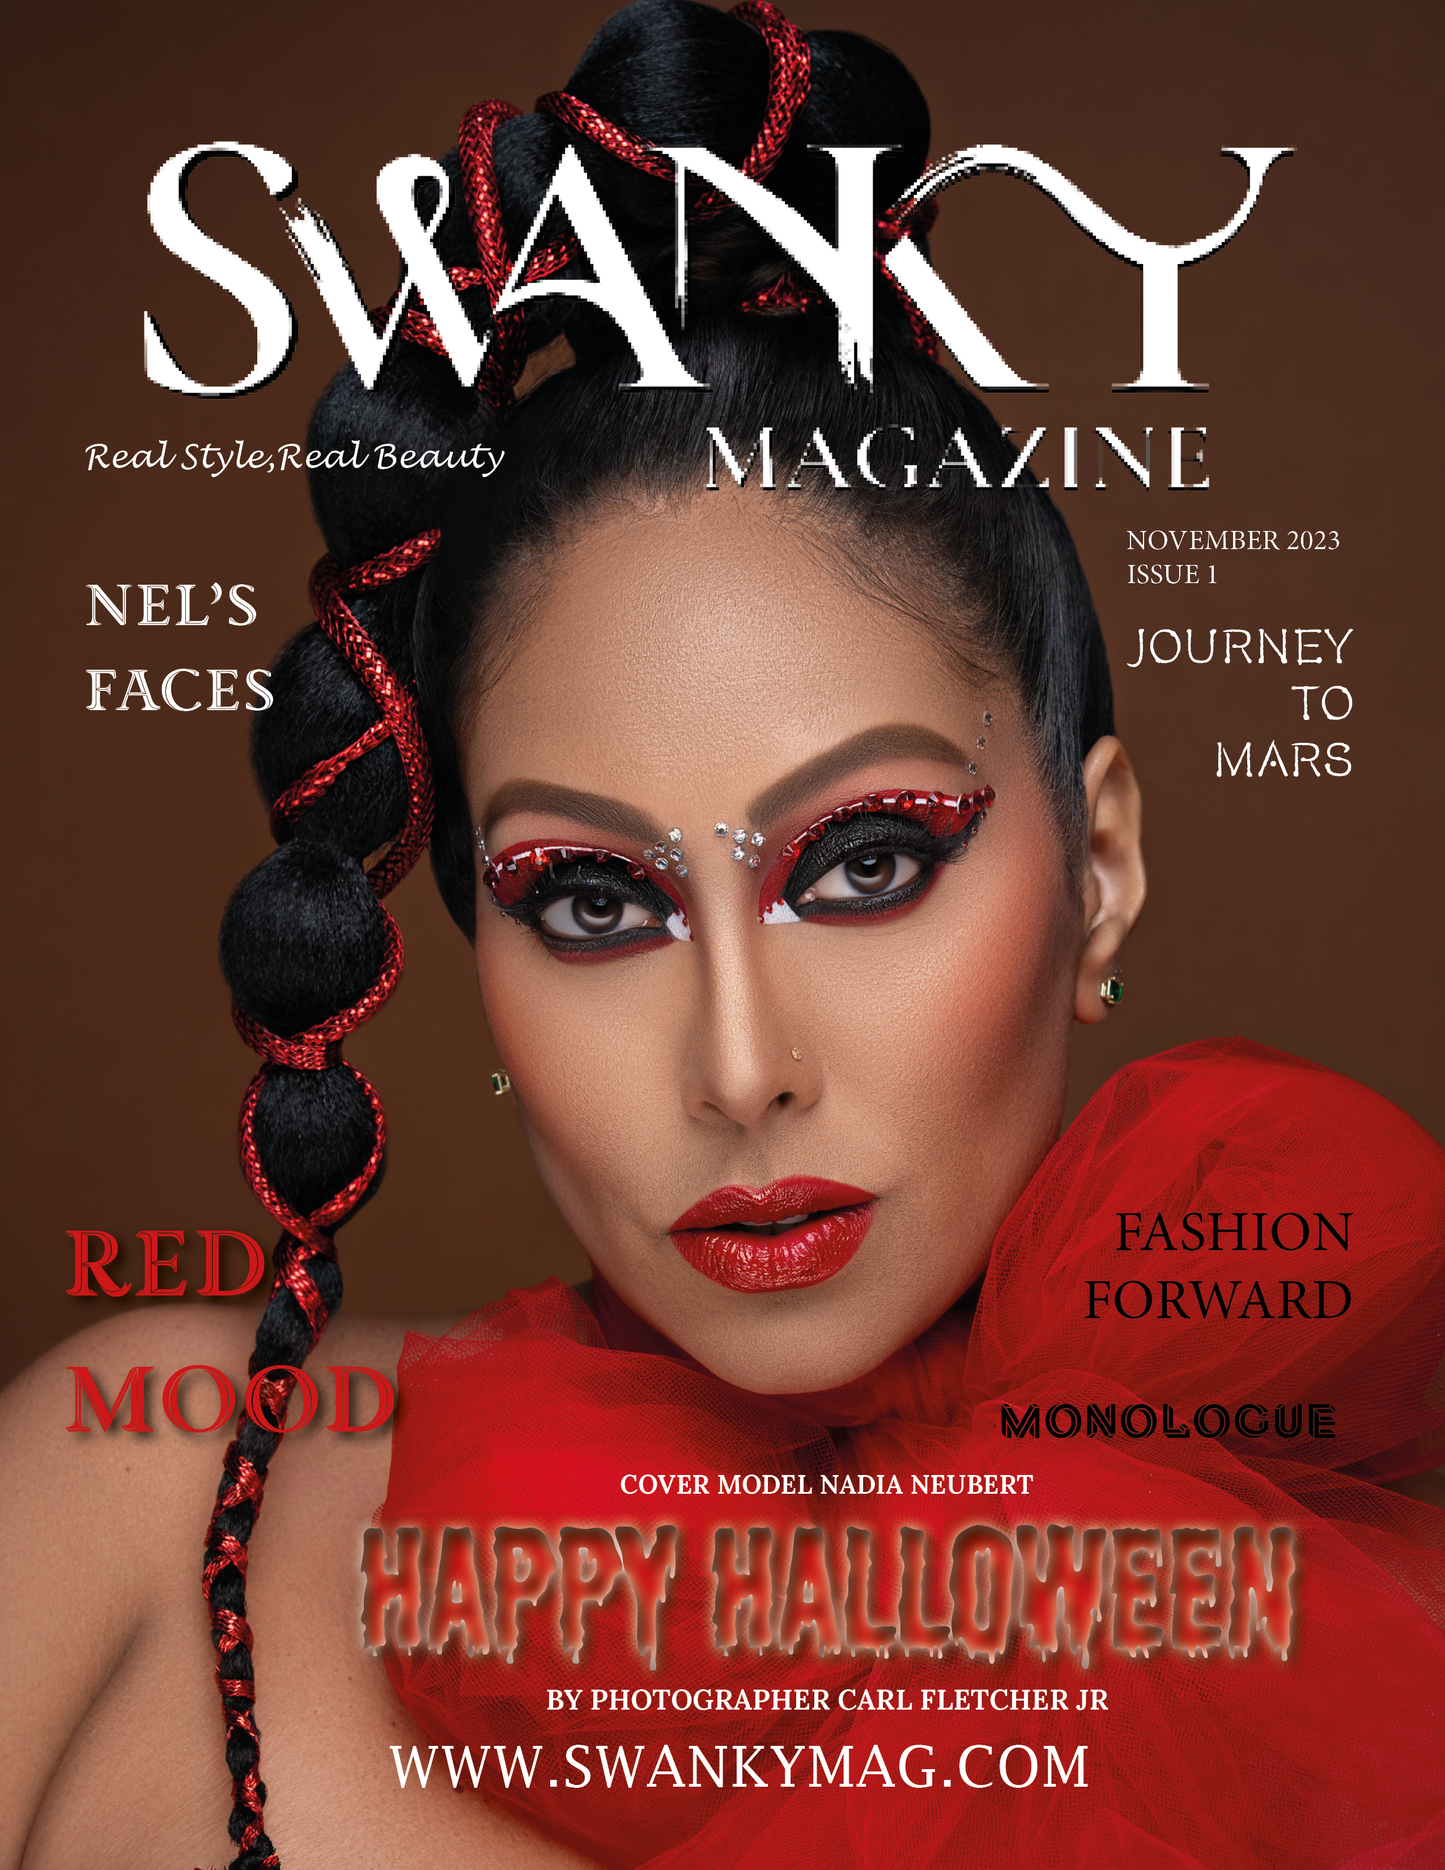 Swanky Fashion and Beauty Magazine: November 2023 Issue I